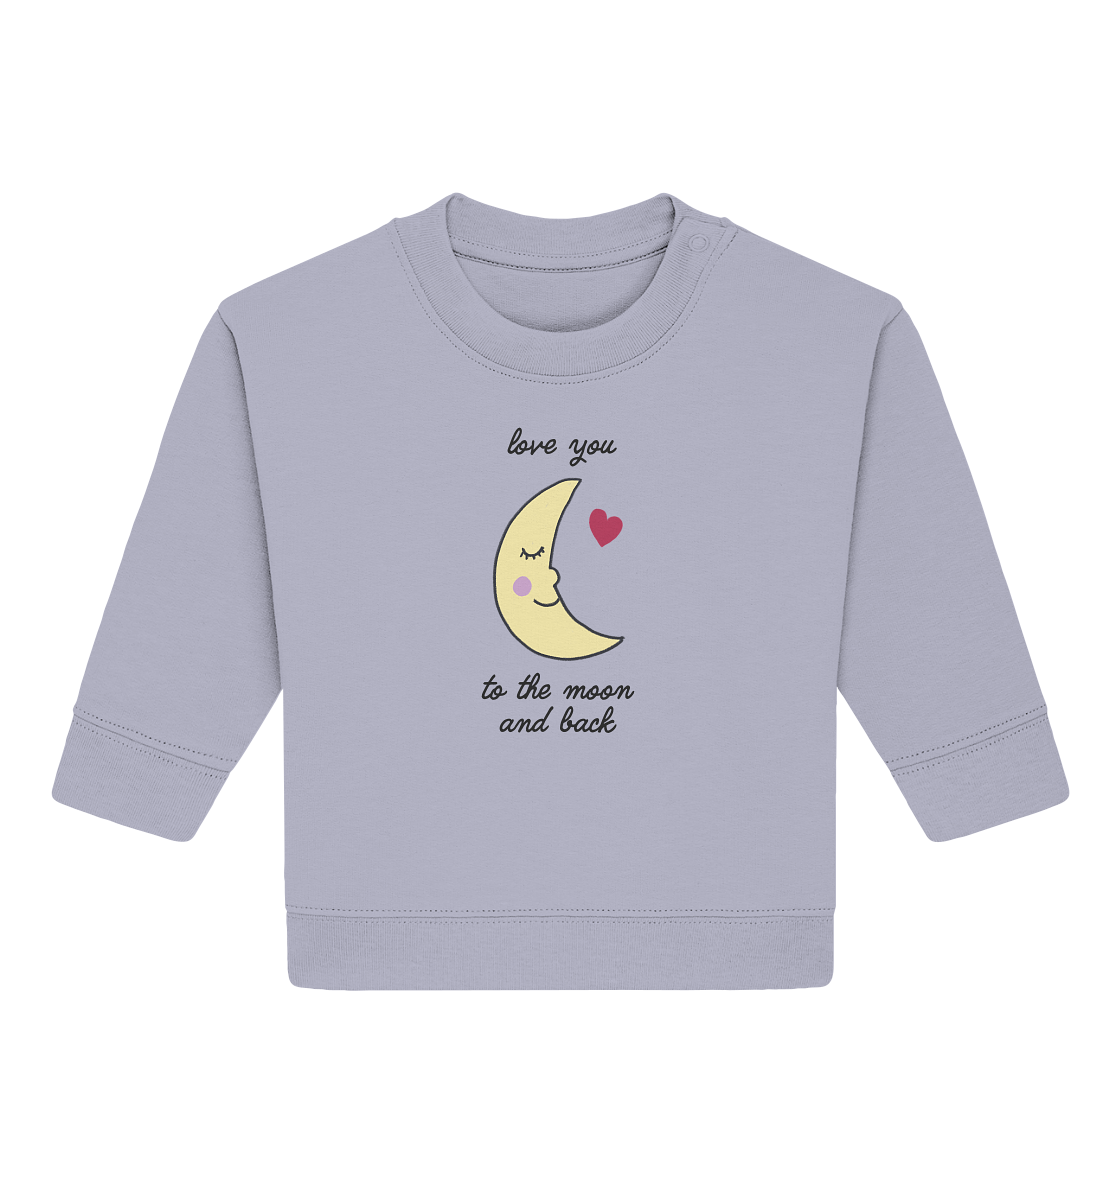 Baby Sweatshirt "Mond"